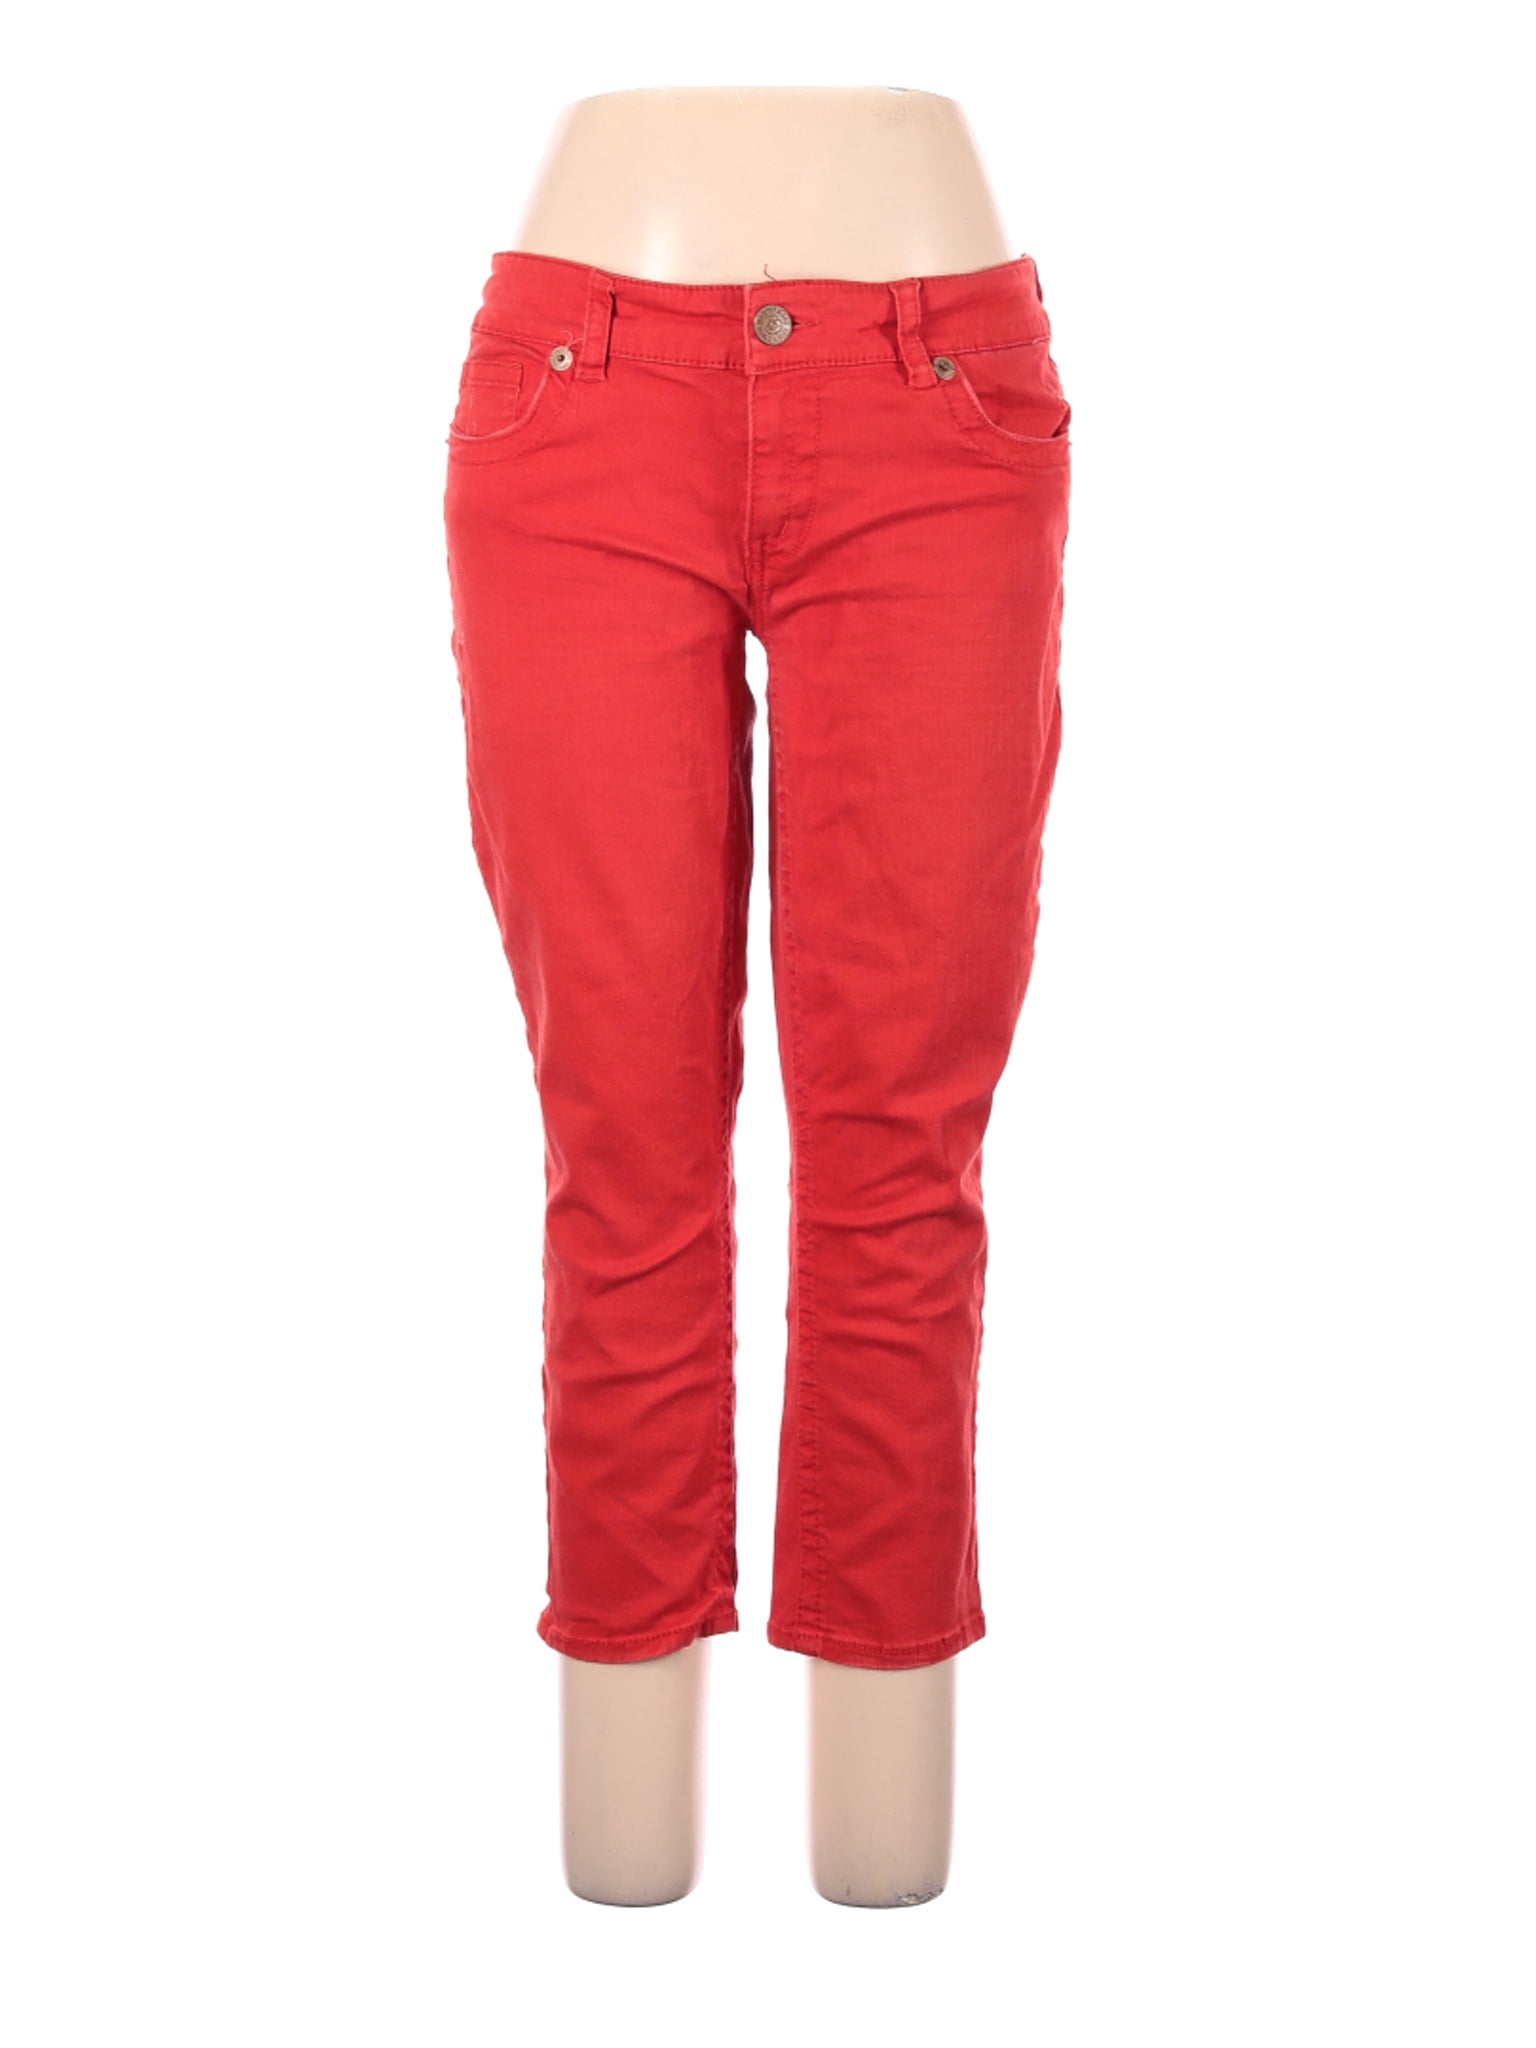 red jeans walmart